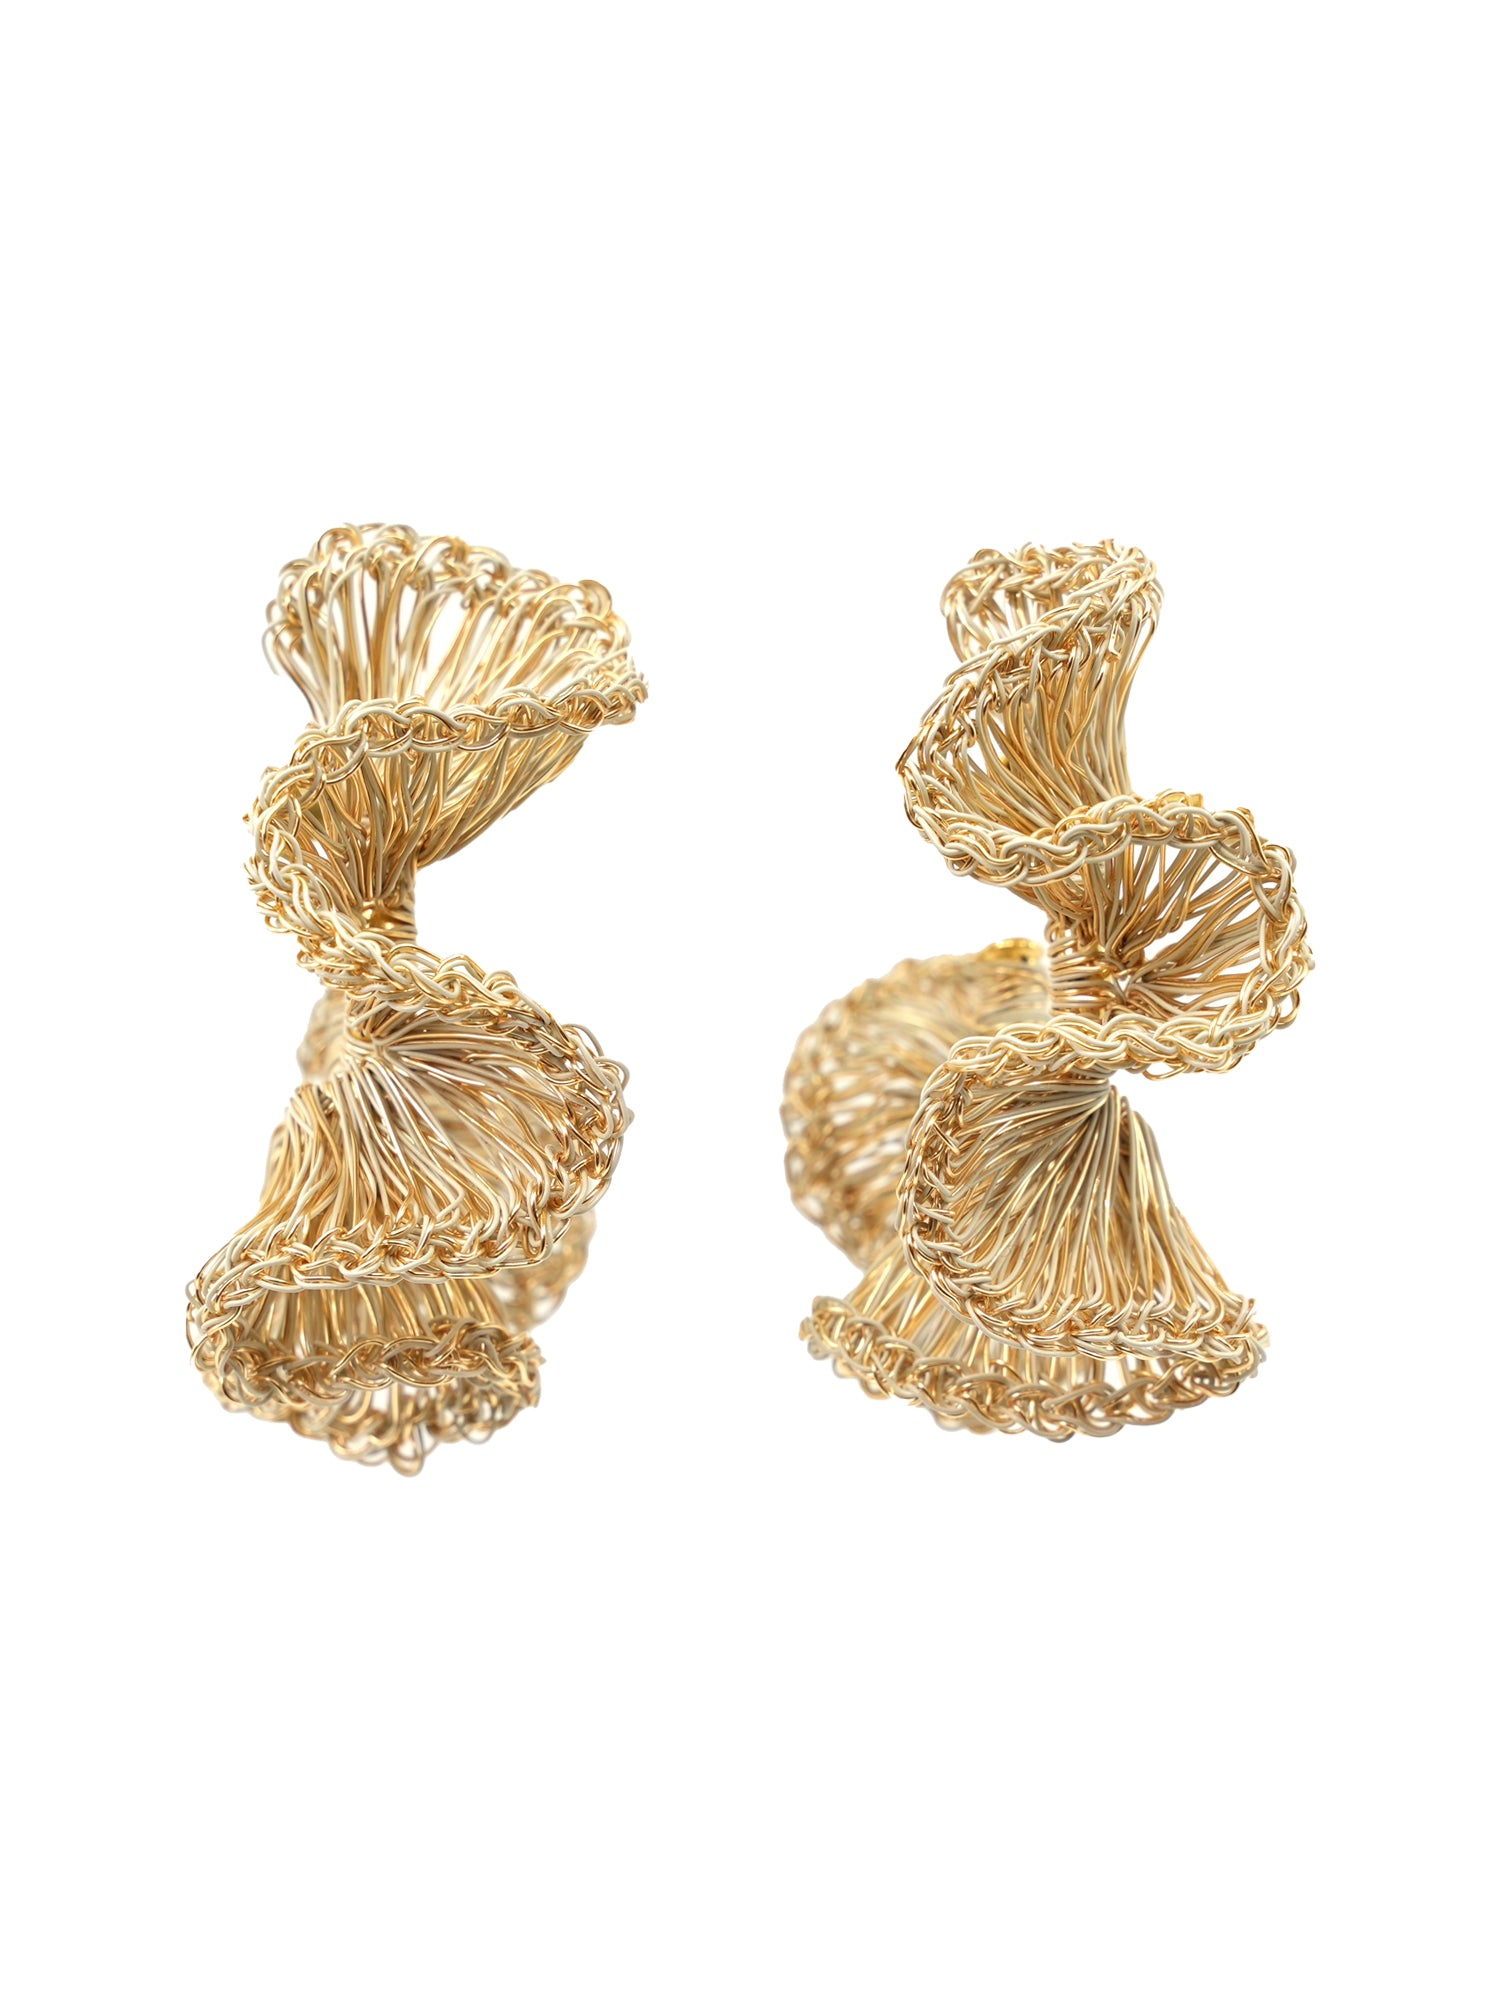 Rio Earrings - Vintage Gold